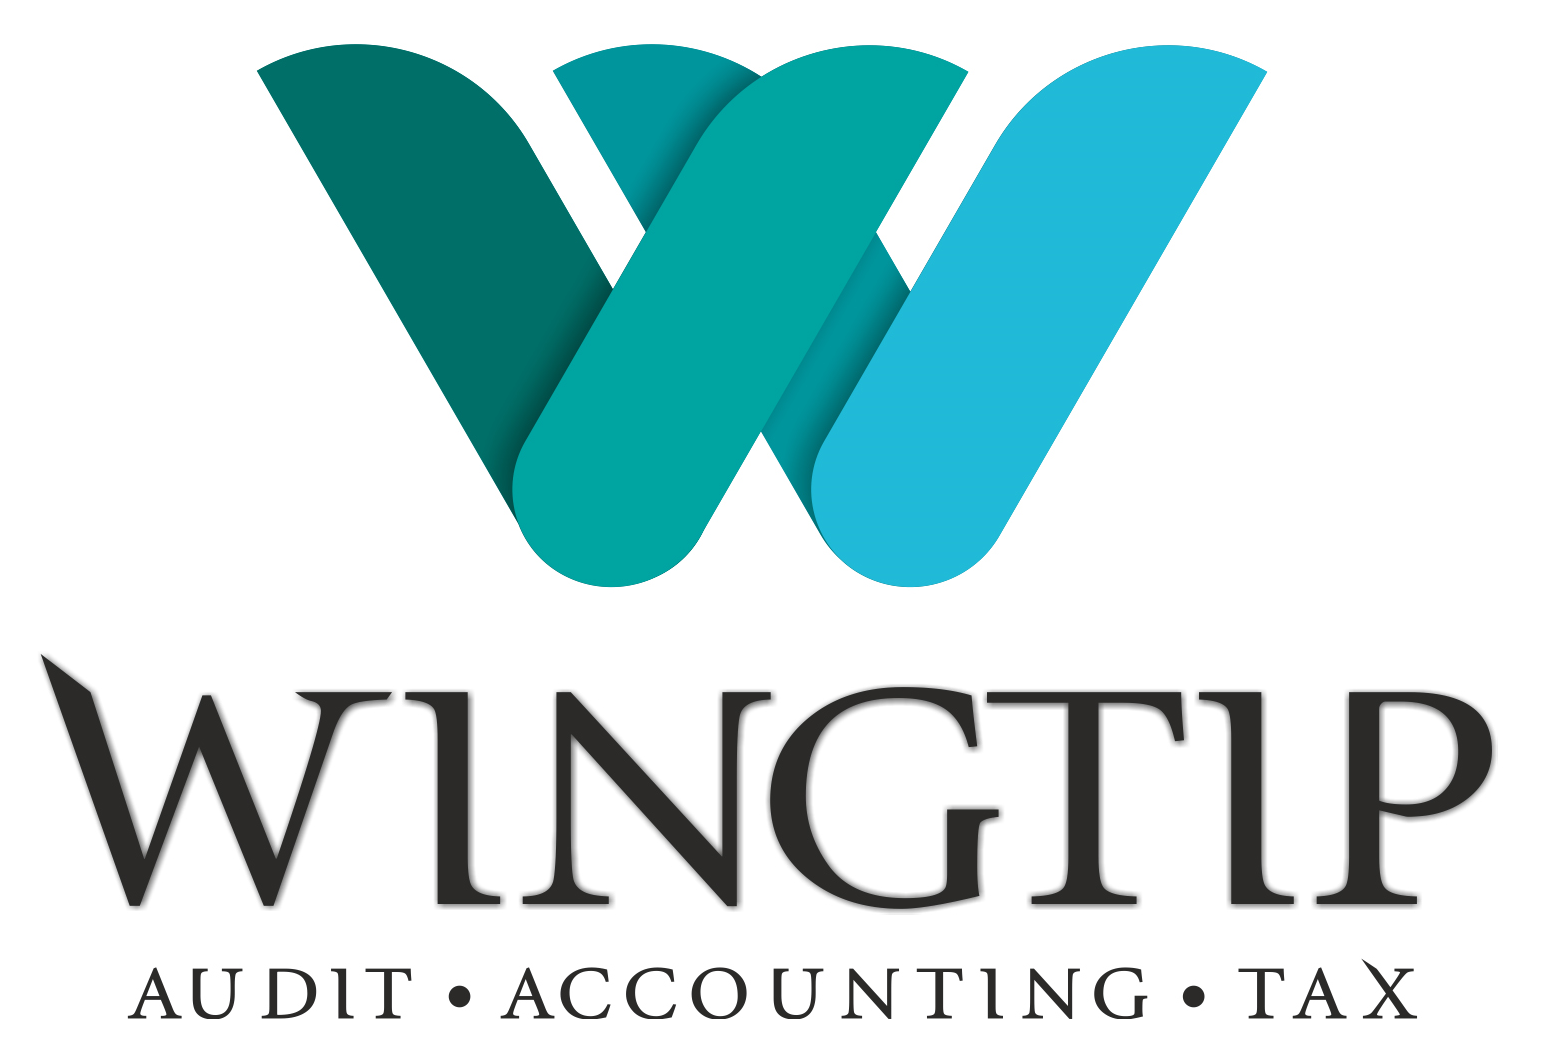 Wingtip Services Ltd